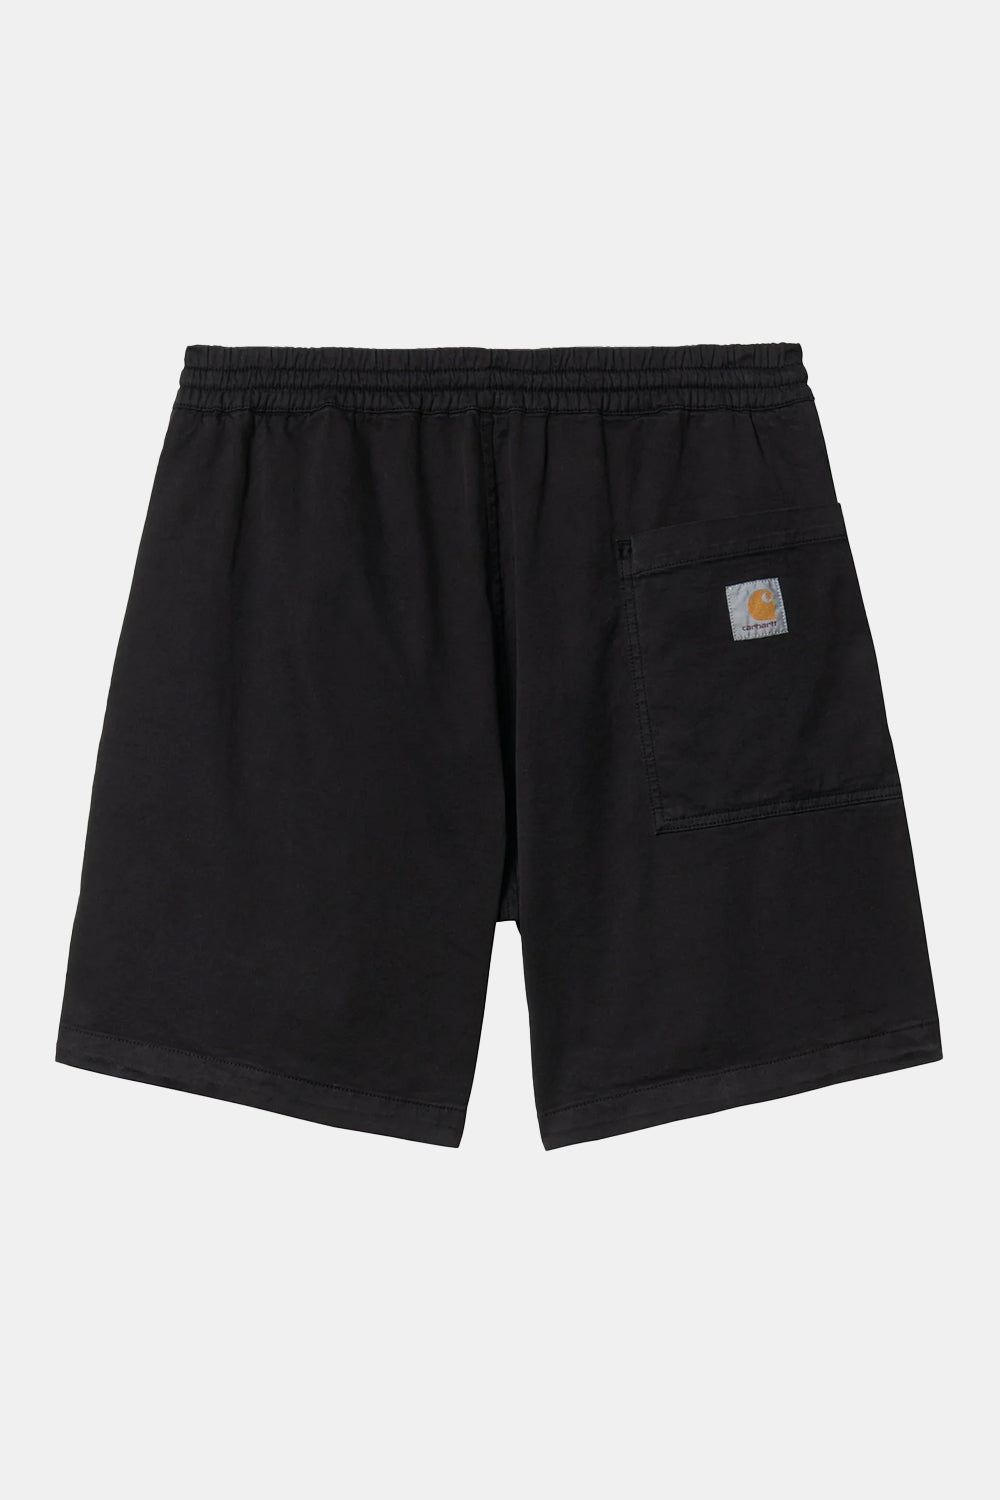 Carhartt WIP Lawton Shorts (Black)